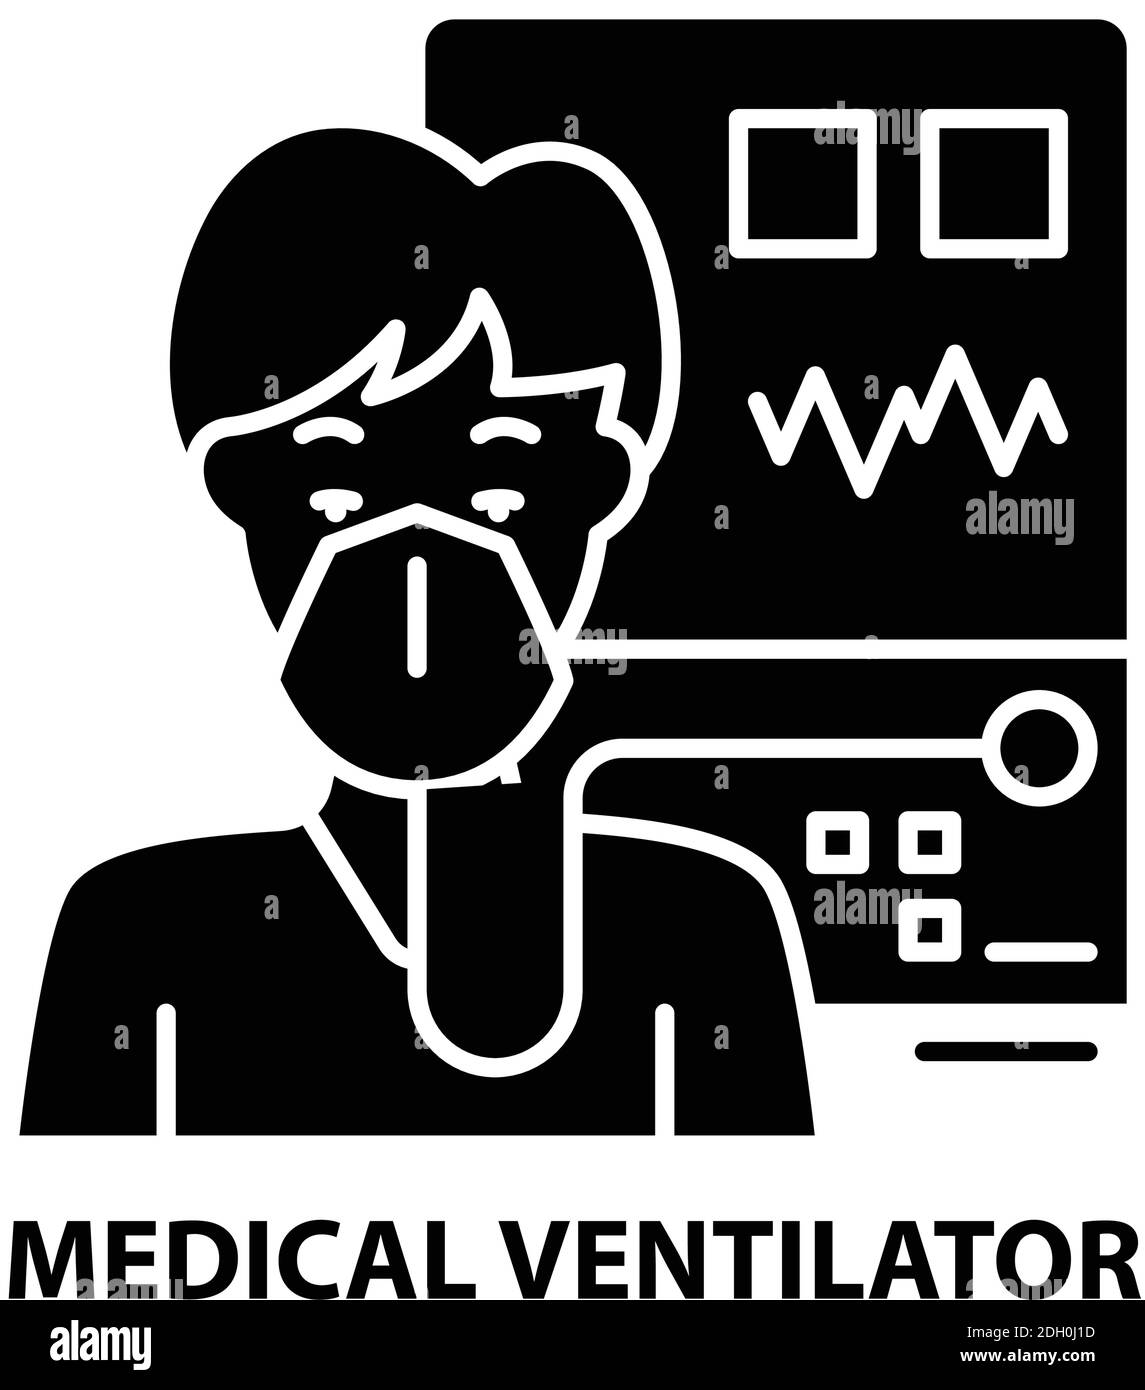 medical ventilator icon, black vector sign with editable strokes, concept illustration Stock Vector